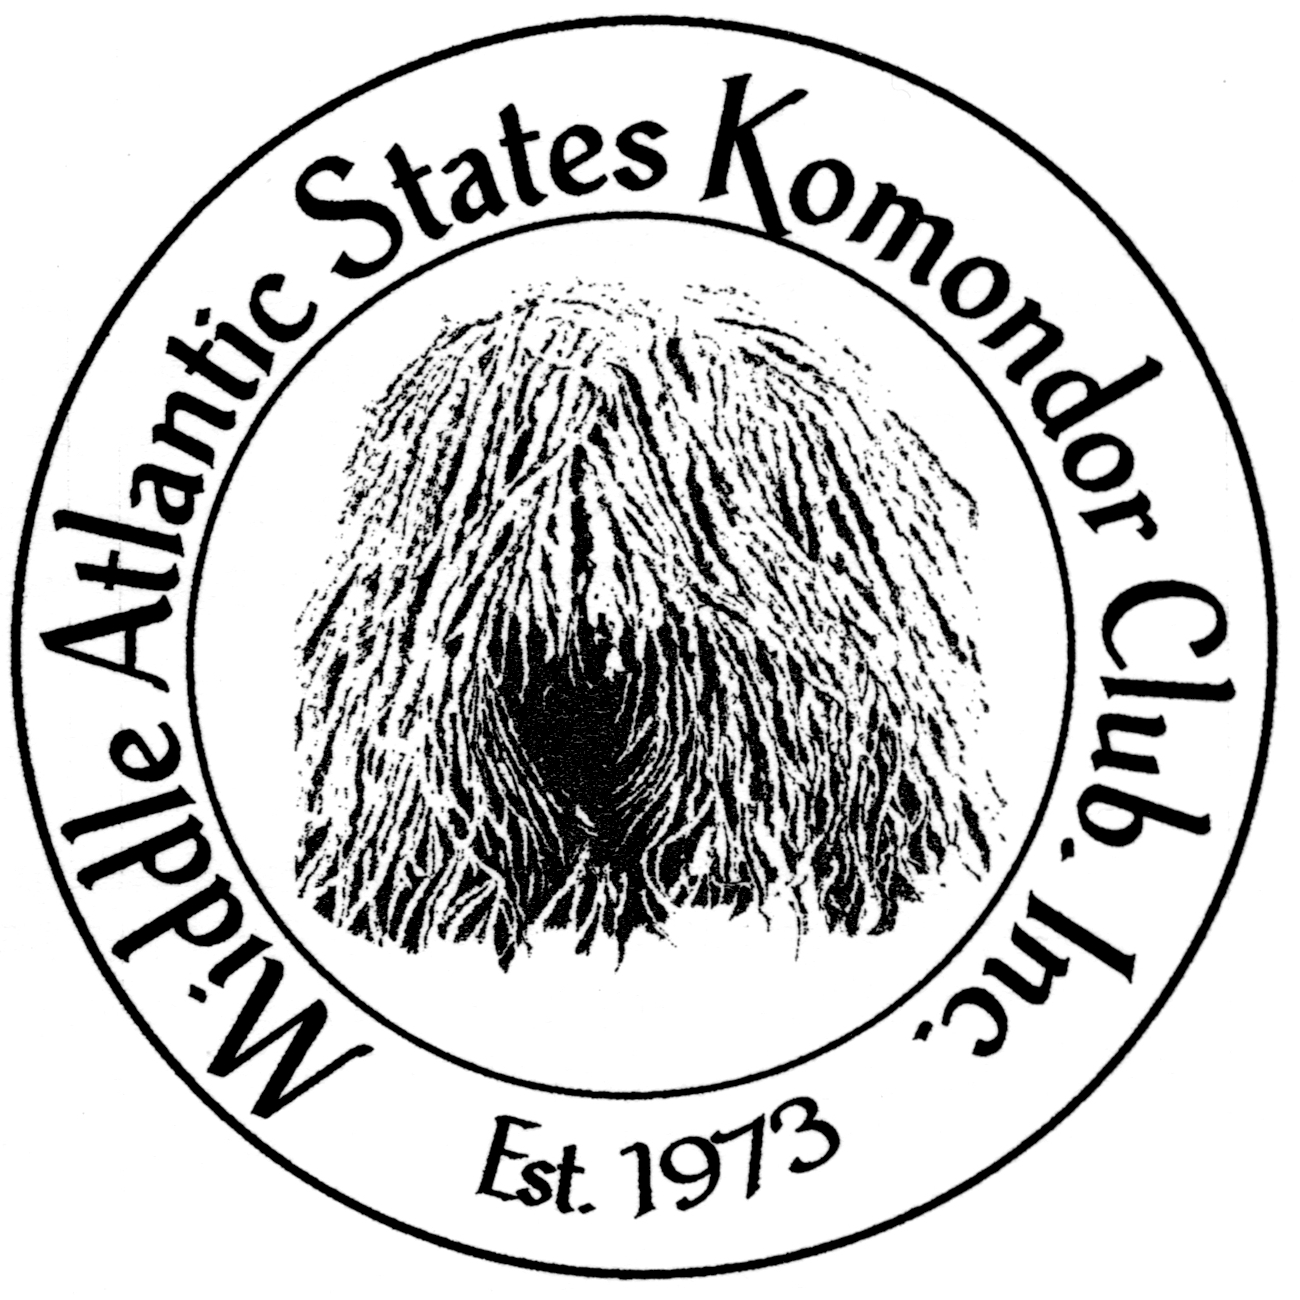 Middle Atlantic States Komondor Club